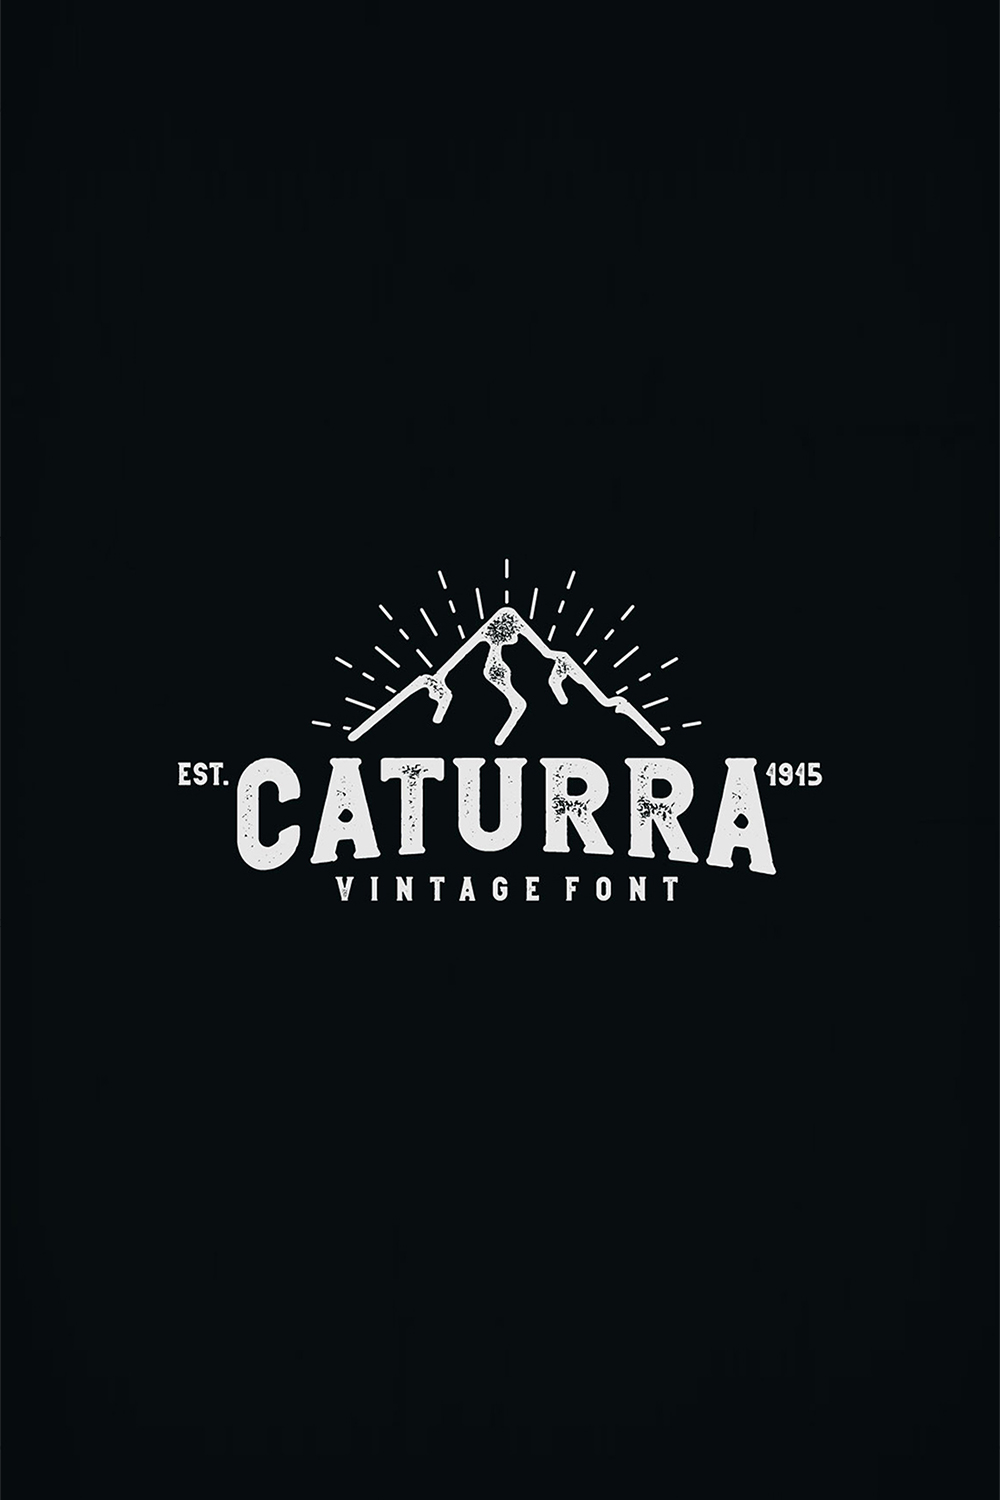 Caturra Vintage Font Family Design pinterest image.